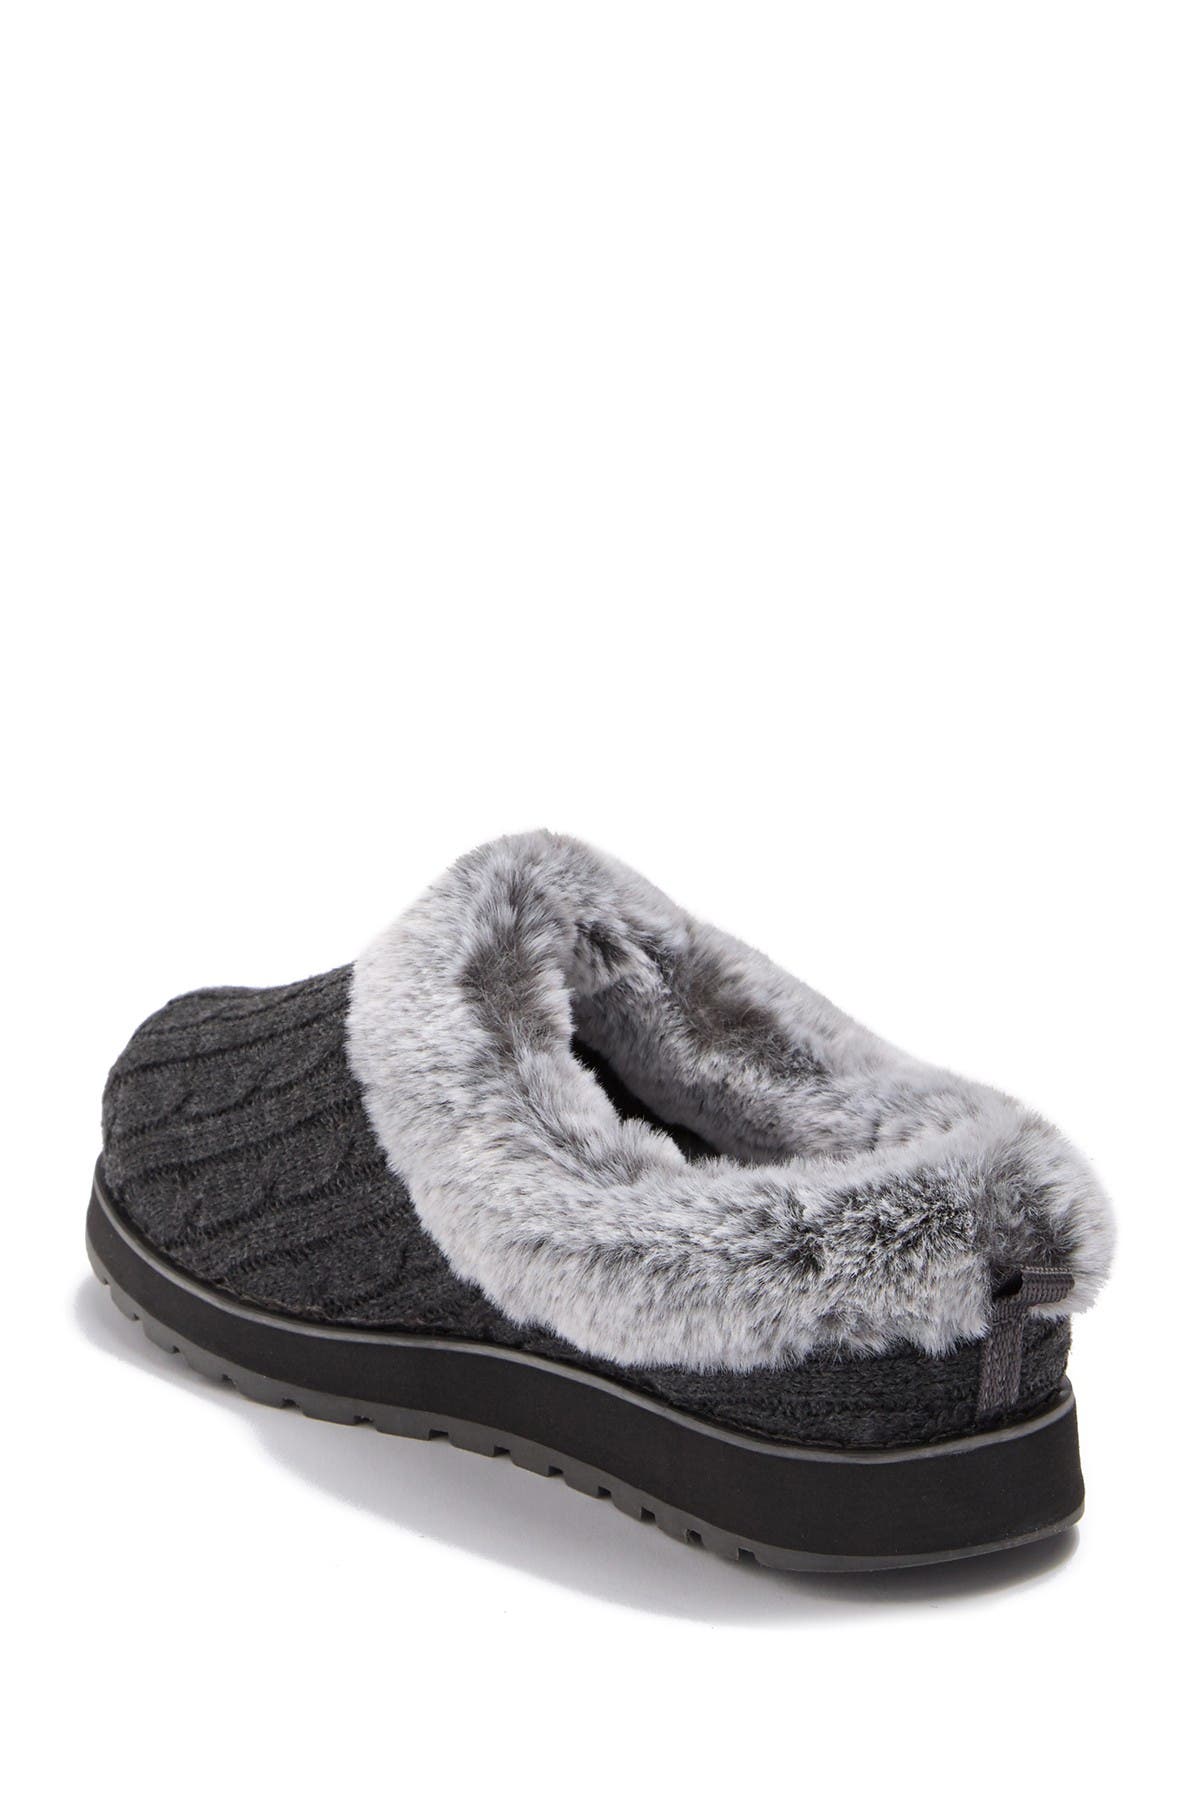 skechers fur slippers